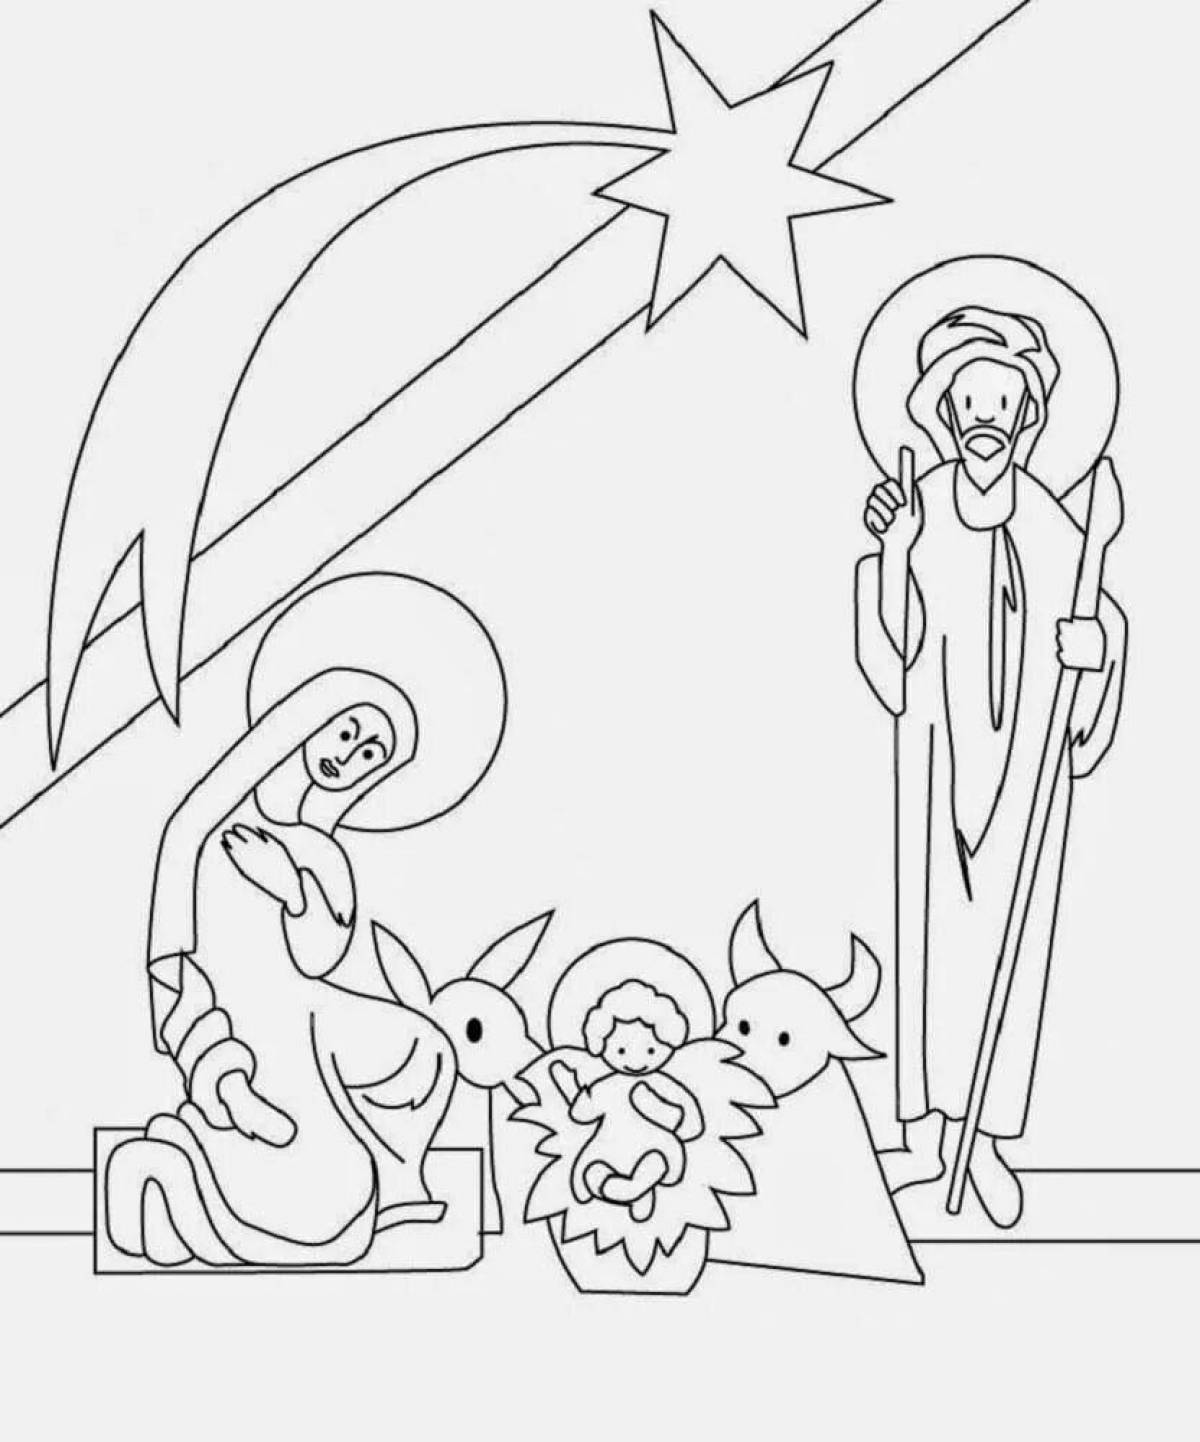 Adorable nativity scene coloring book for kids